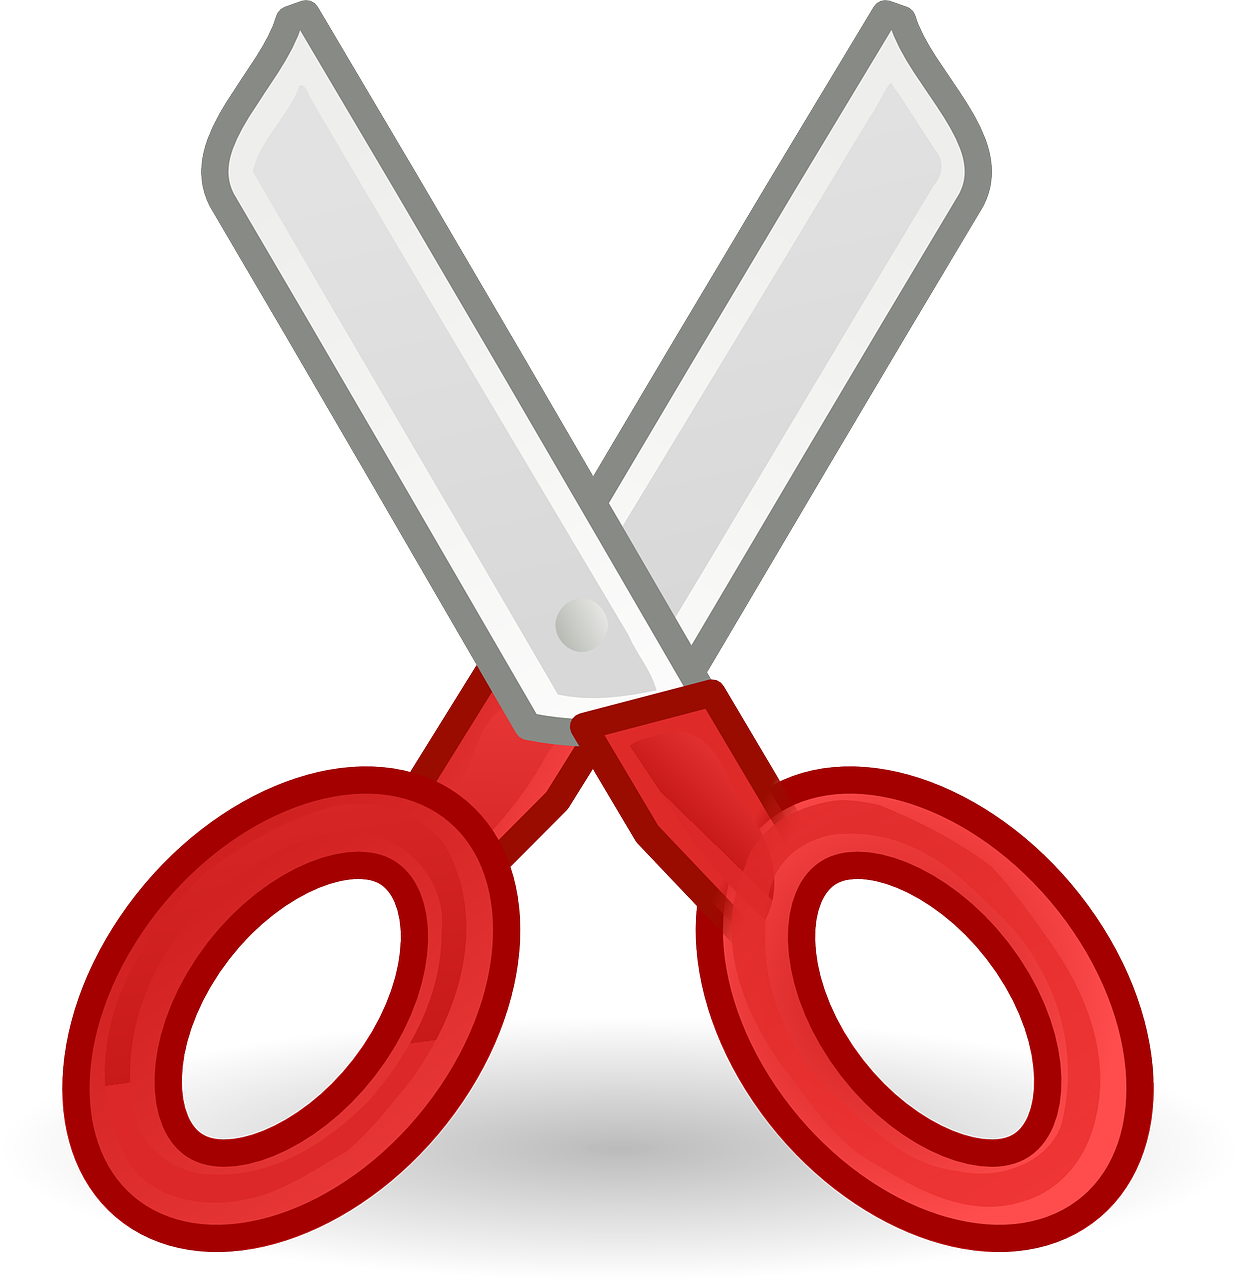 Free to Use & Public Domain Scissors Clip Art